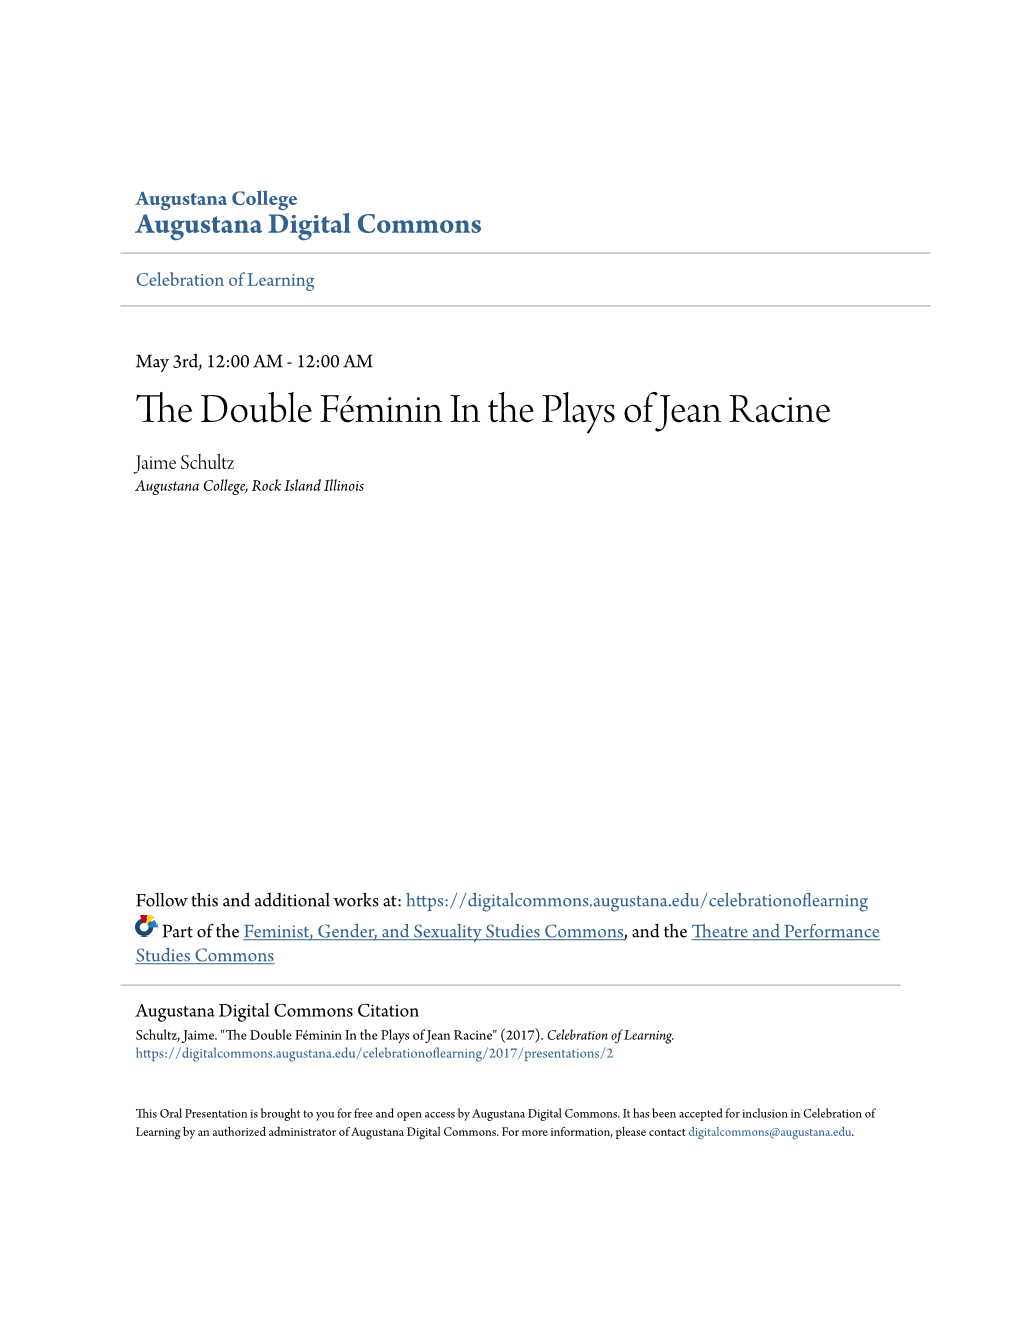 The Double FÃ©Minin in the Plays of Jean Racine